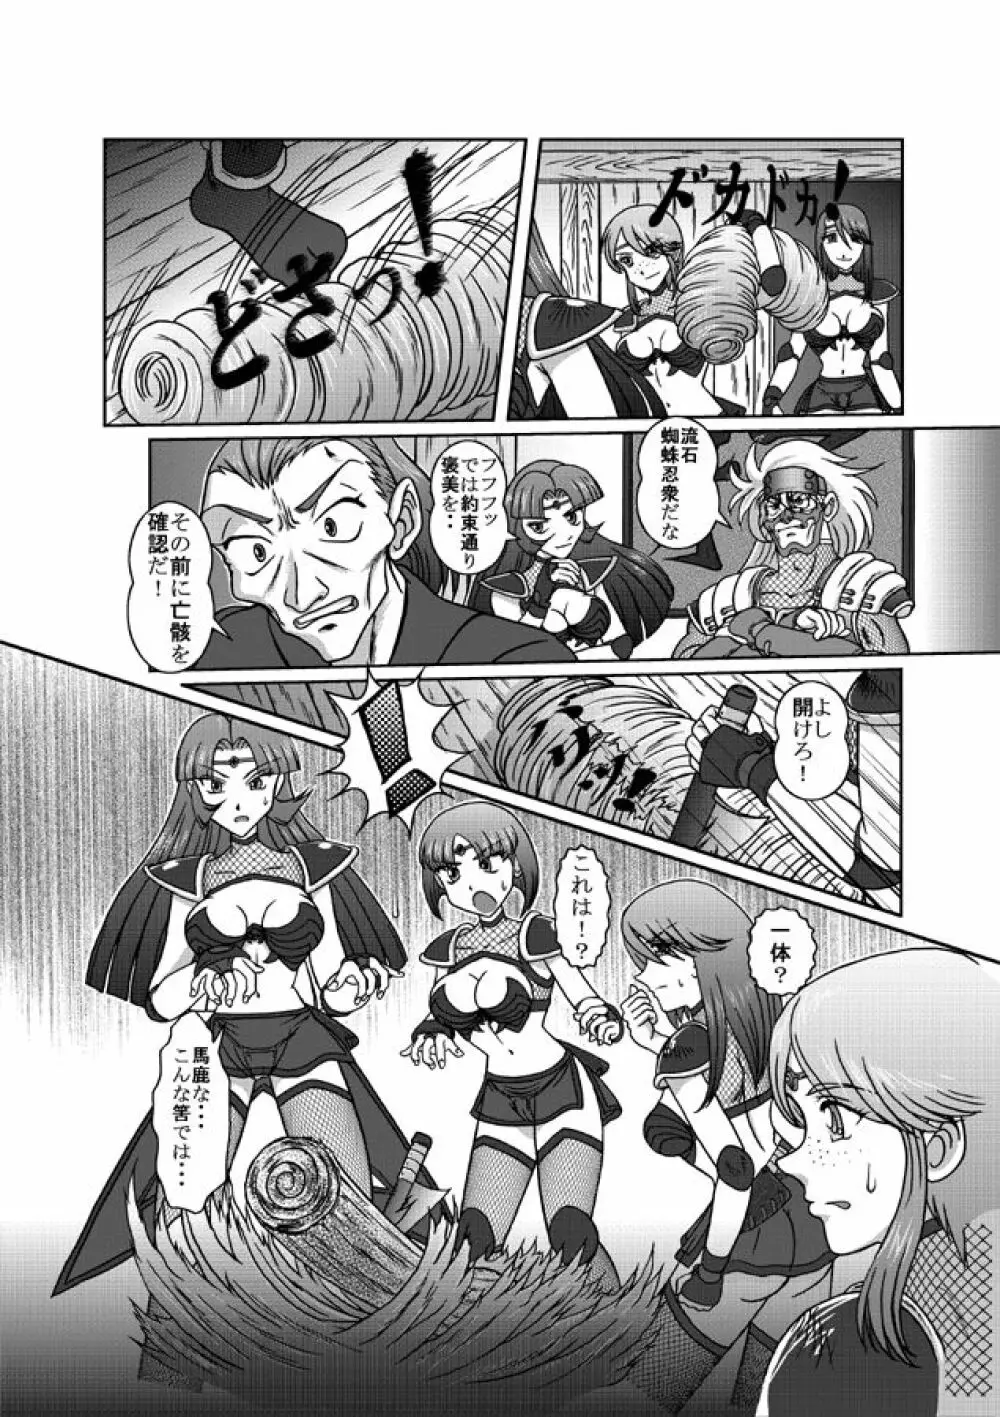 Same-themed manga about kid fighting female ninjas from japanese imageboard. 22ページ